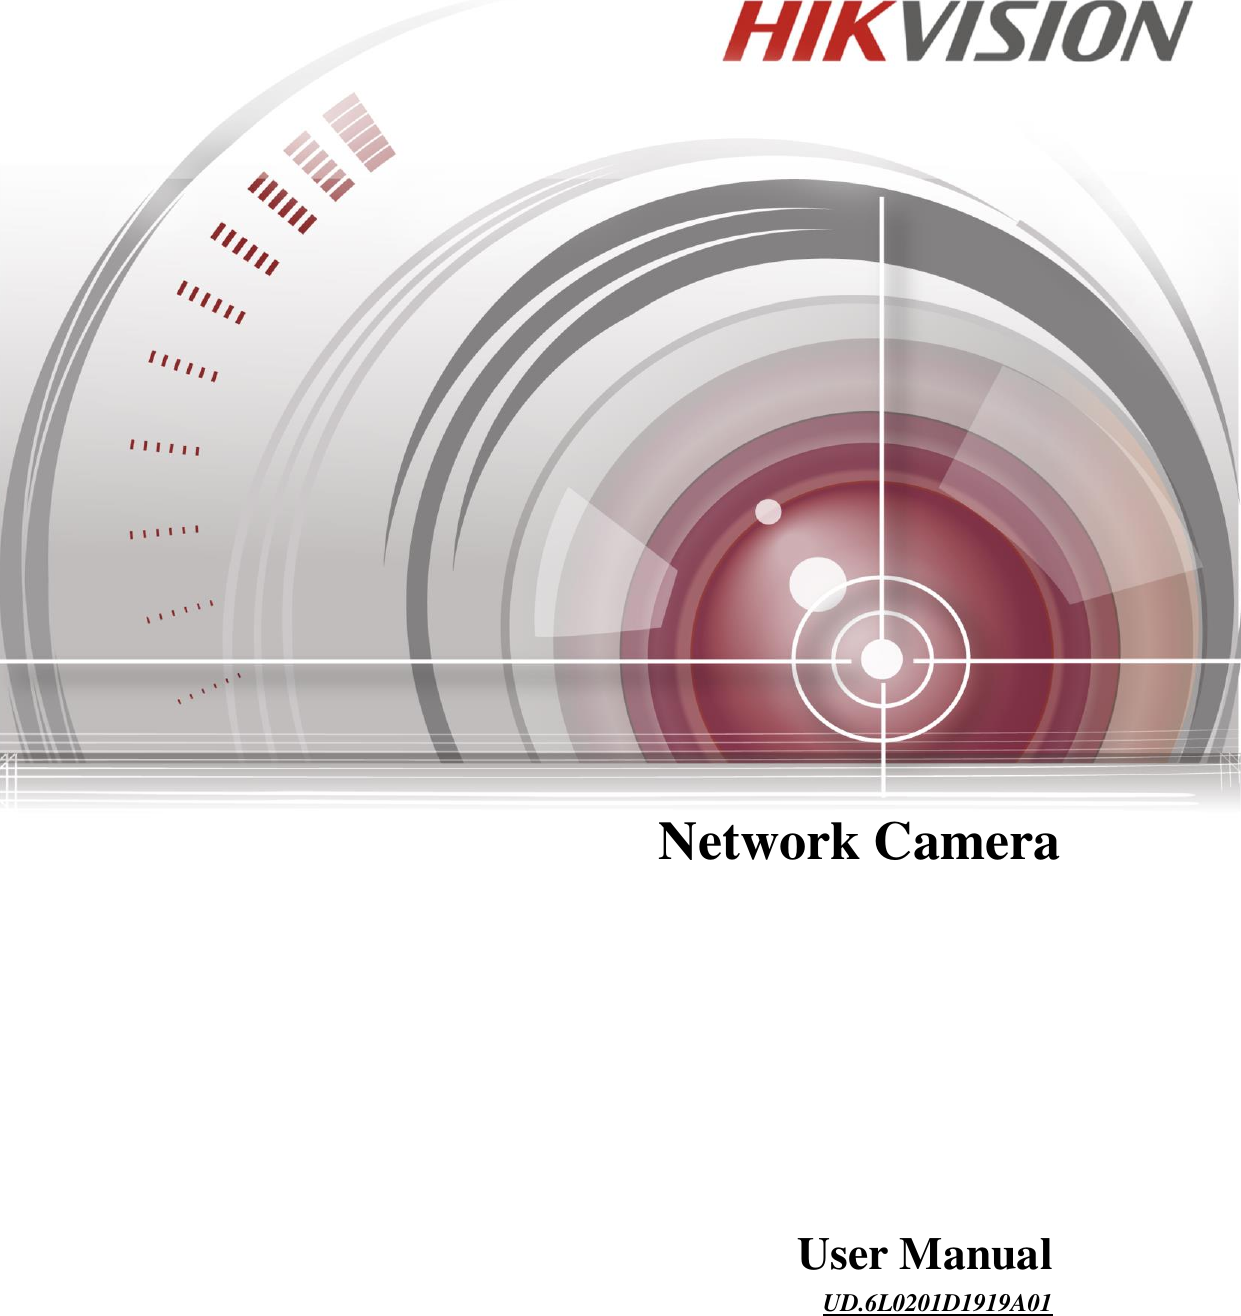 User Manual of Network Camera 1                          User Manual UD.6L0201D1919A01  Network Camera 